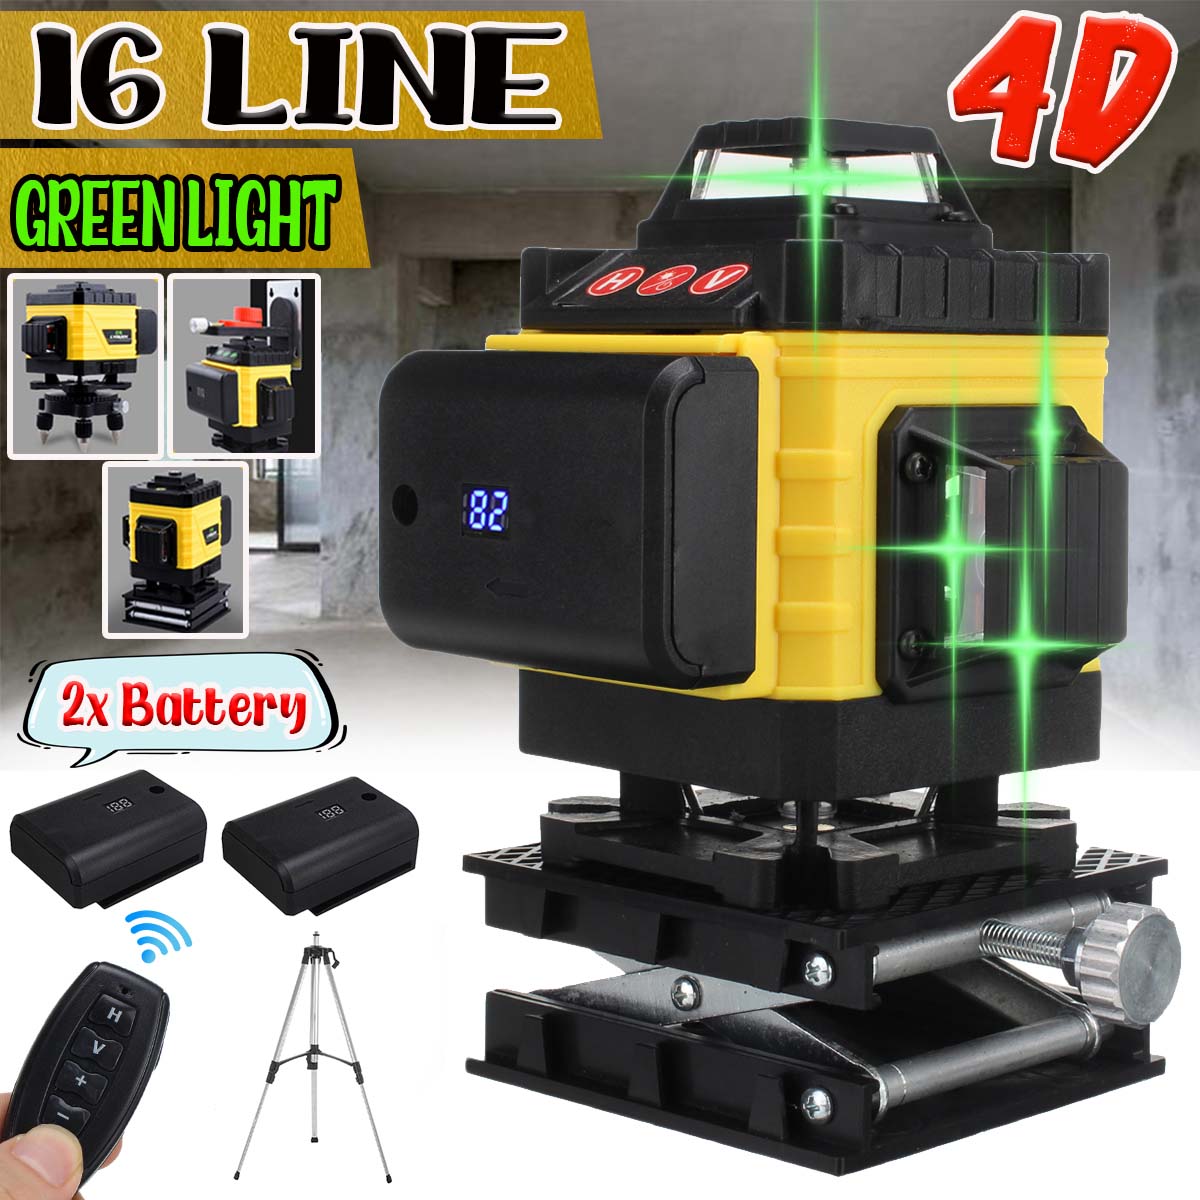 4D-16-Lines-Green-Light--Laser-Levels-360deg-Self-Leveling-Cross-Horizontal-Measure-with-2-Batteries-1937801-1